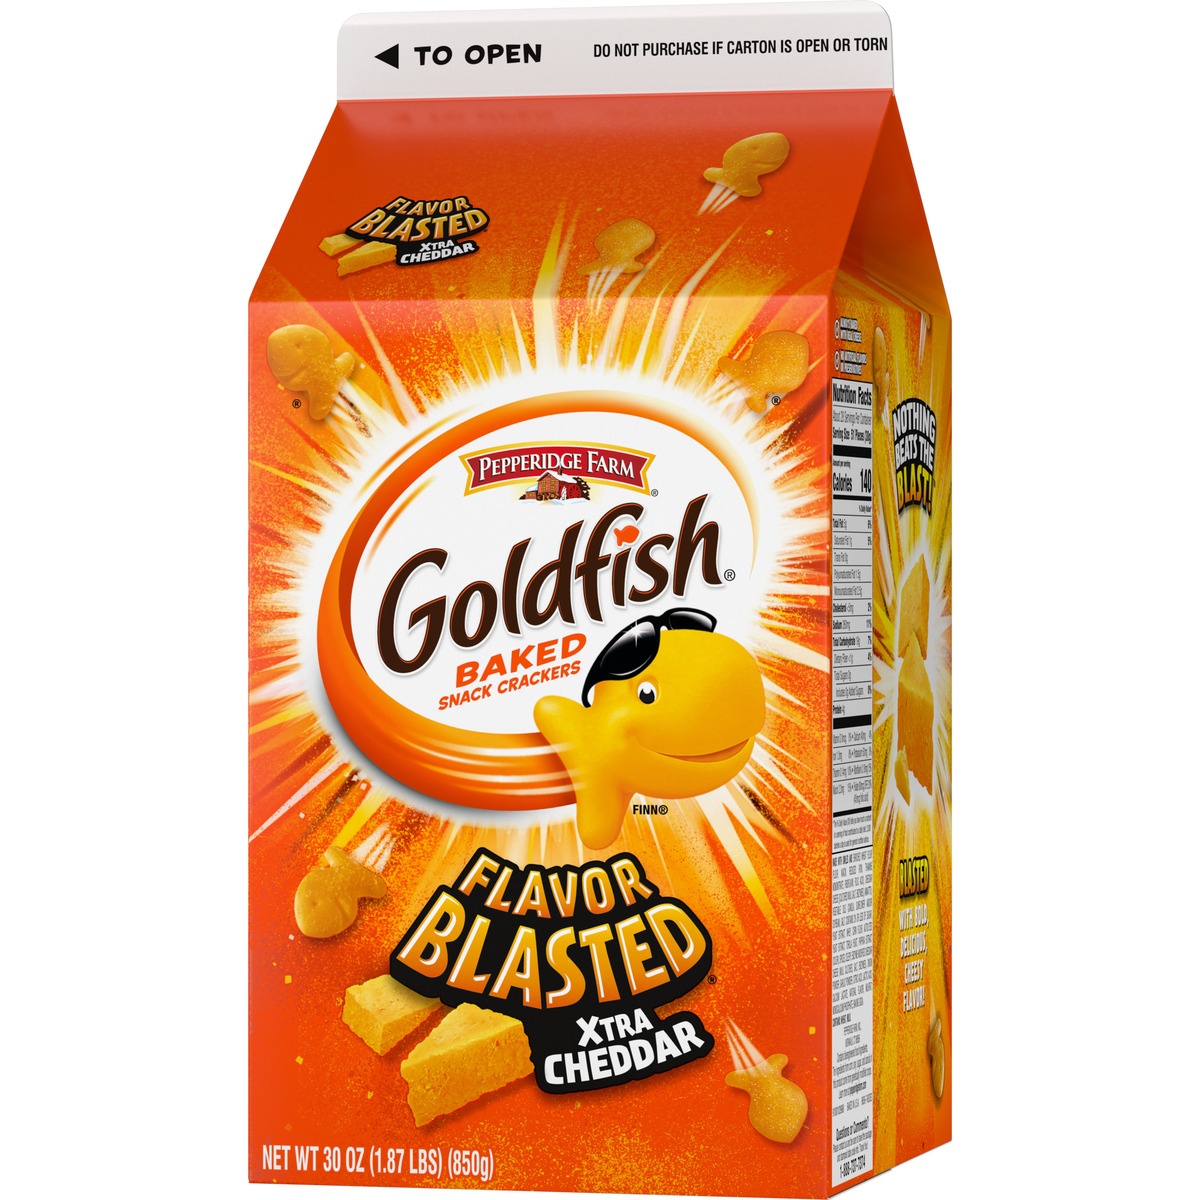 slide 3 of 11, Goldfish Flavor Blasted Xtra Cheddar Baked Snack Crackers, 30 oz